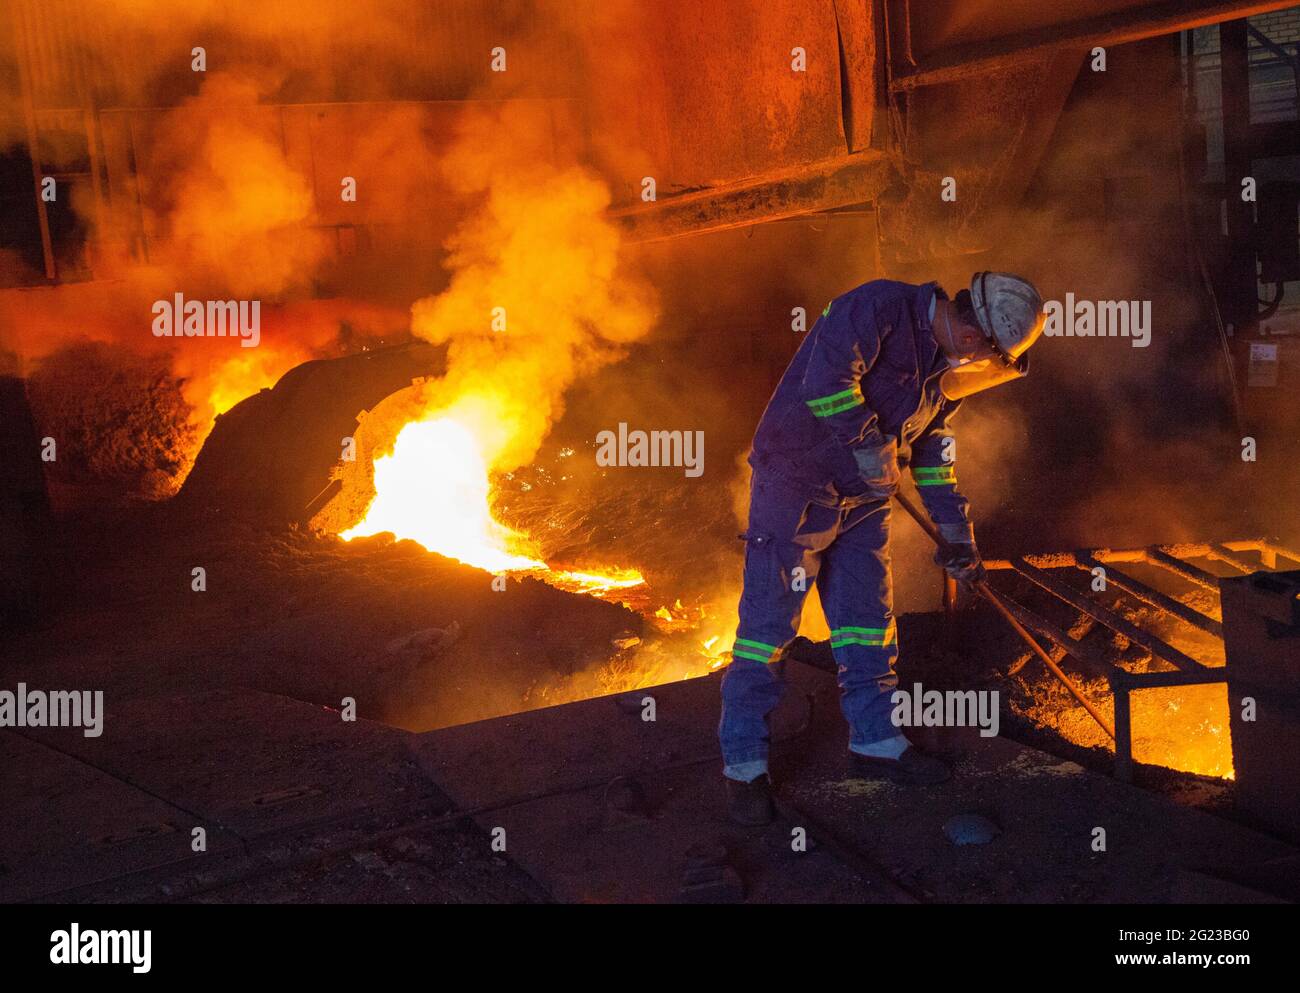 Eregli, Zonguldak Turkey - 05-20-2013: An view from the production process at Ereğli Iron and Steel Factory. Stock Photo